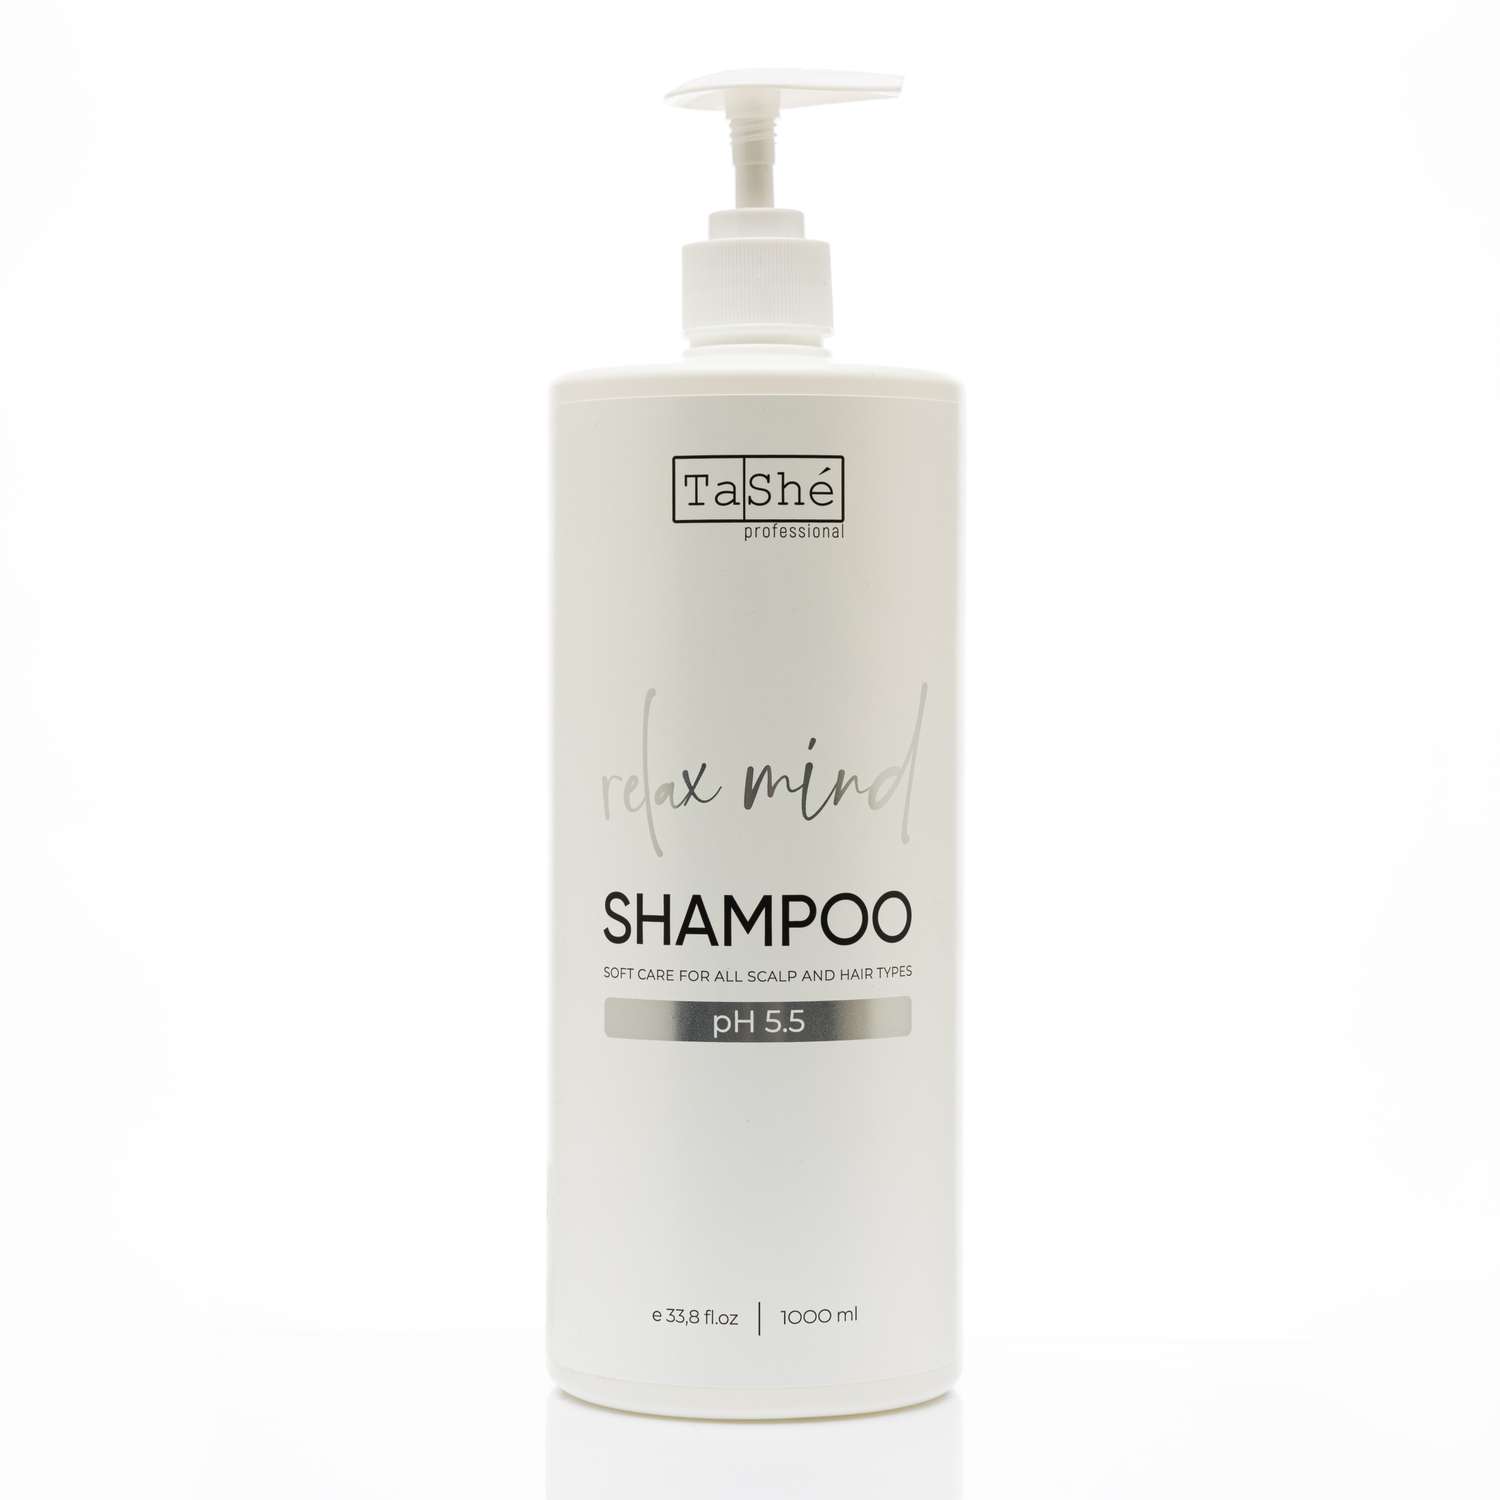 Шампунь для волос Tashe Professional для всех типов 1000мл - фото 5